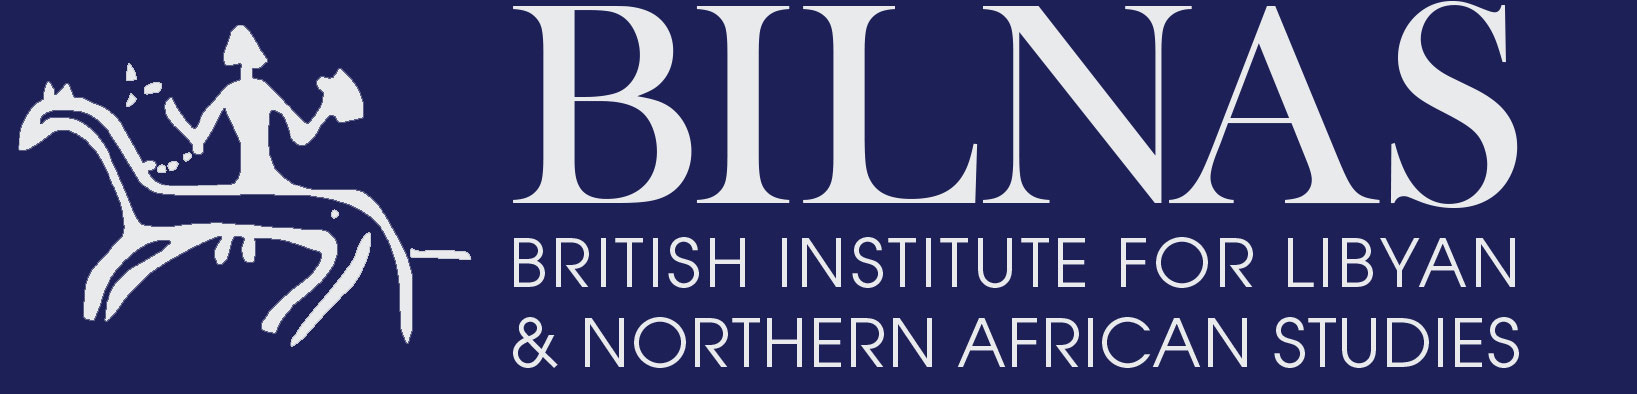 British Institute for Libyan & Northern African Studies Logo